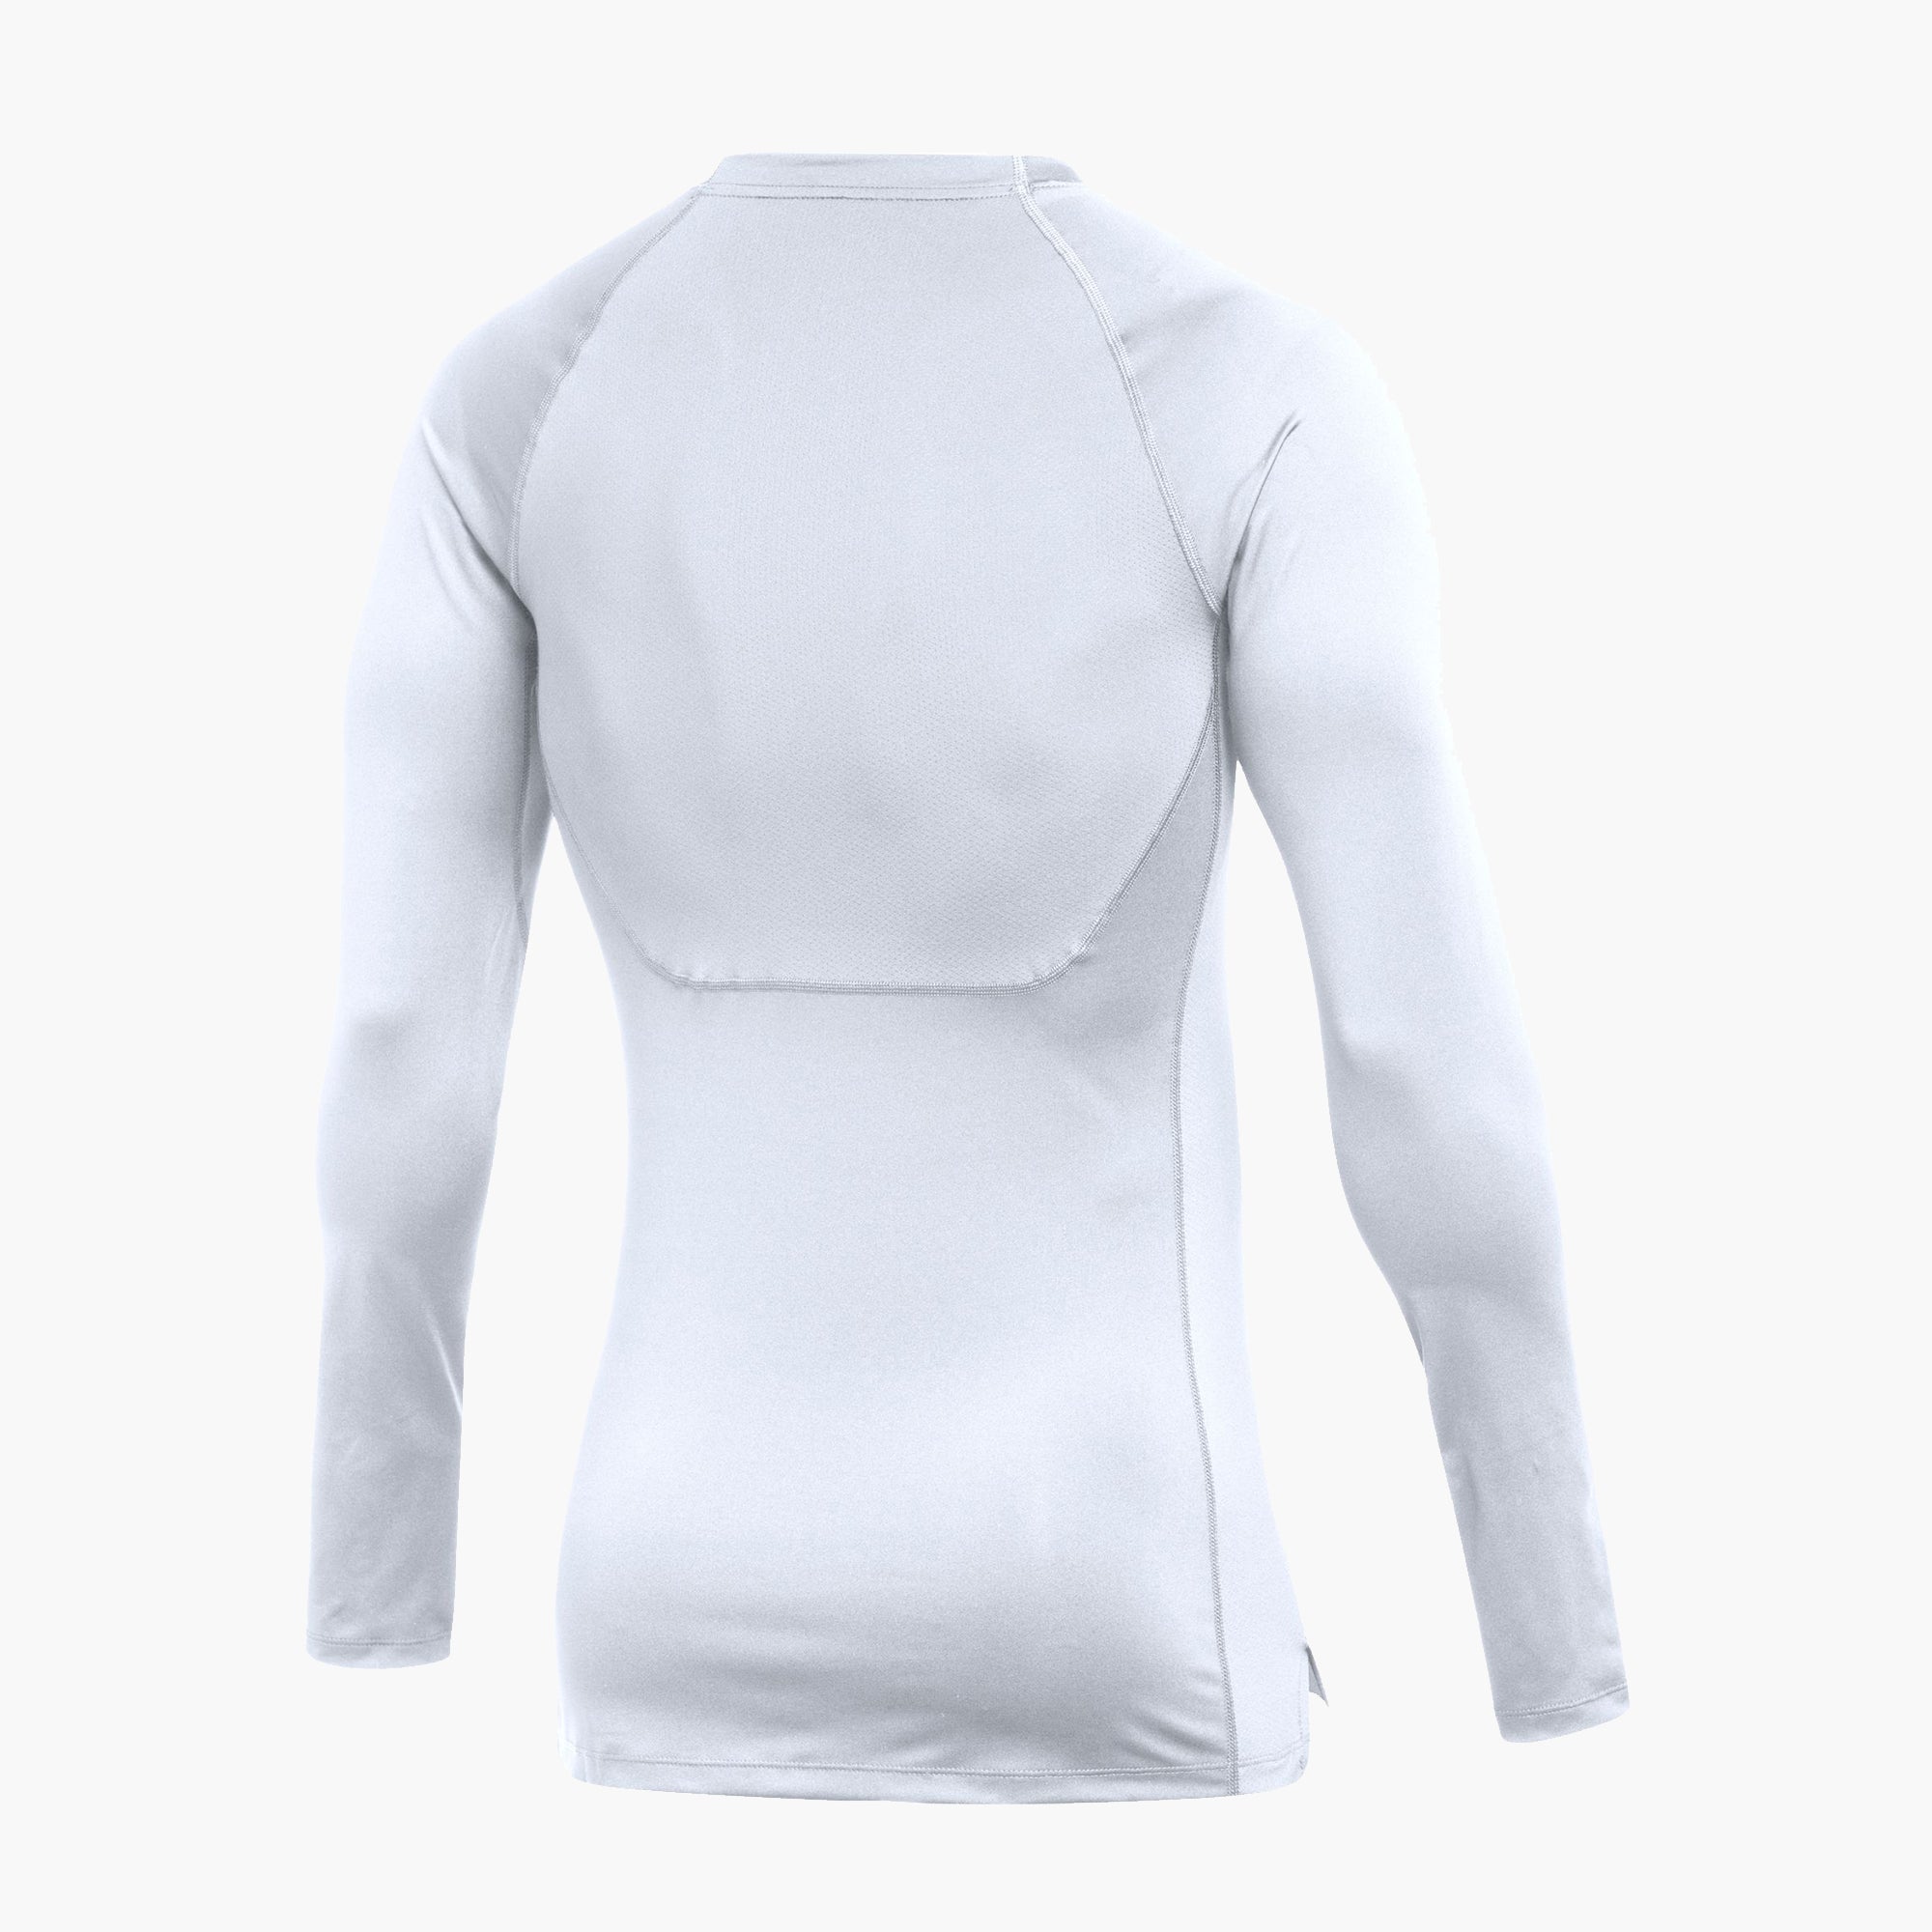 Nike Pro Tight Long Sleeve Base Layer Compression Shirt Men's